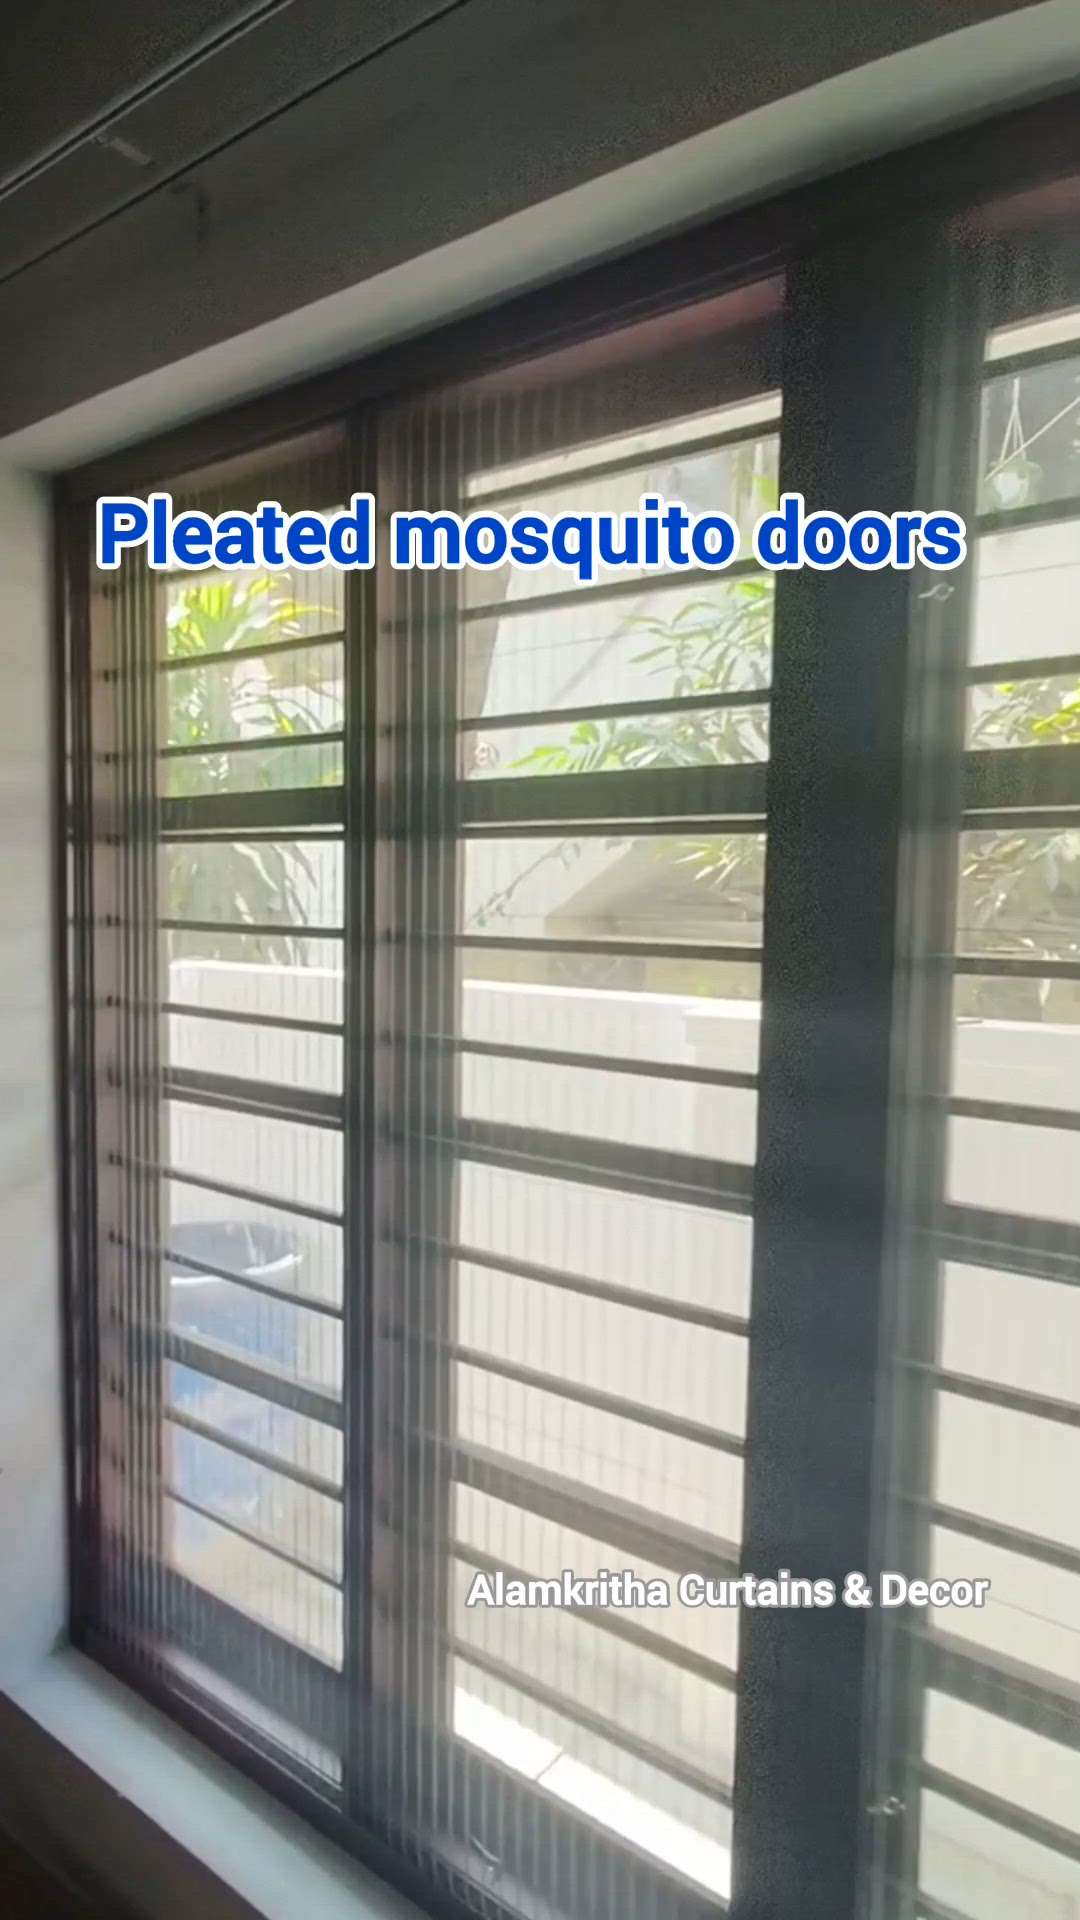 sliding pleated mosquito doors for big windows and balcony.
ALL KERALA SERVICE
9633 508080

 #mosquitodoor #HomeDecor #pleatedmeshdoor #mosquitoscreen